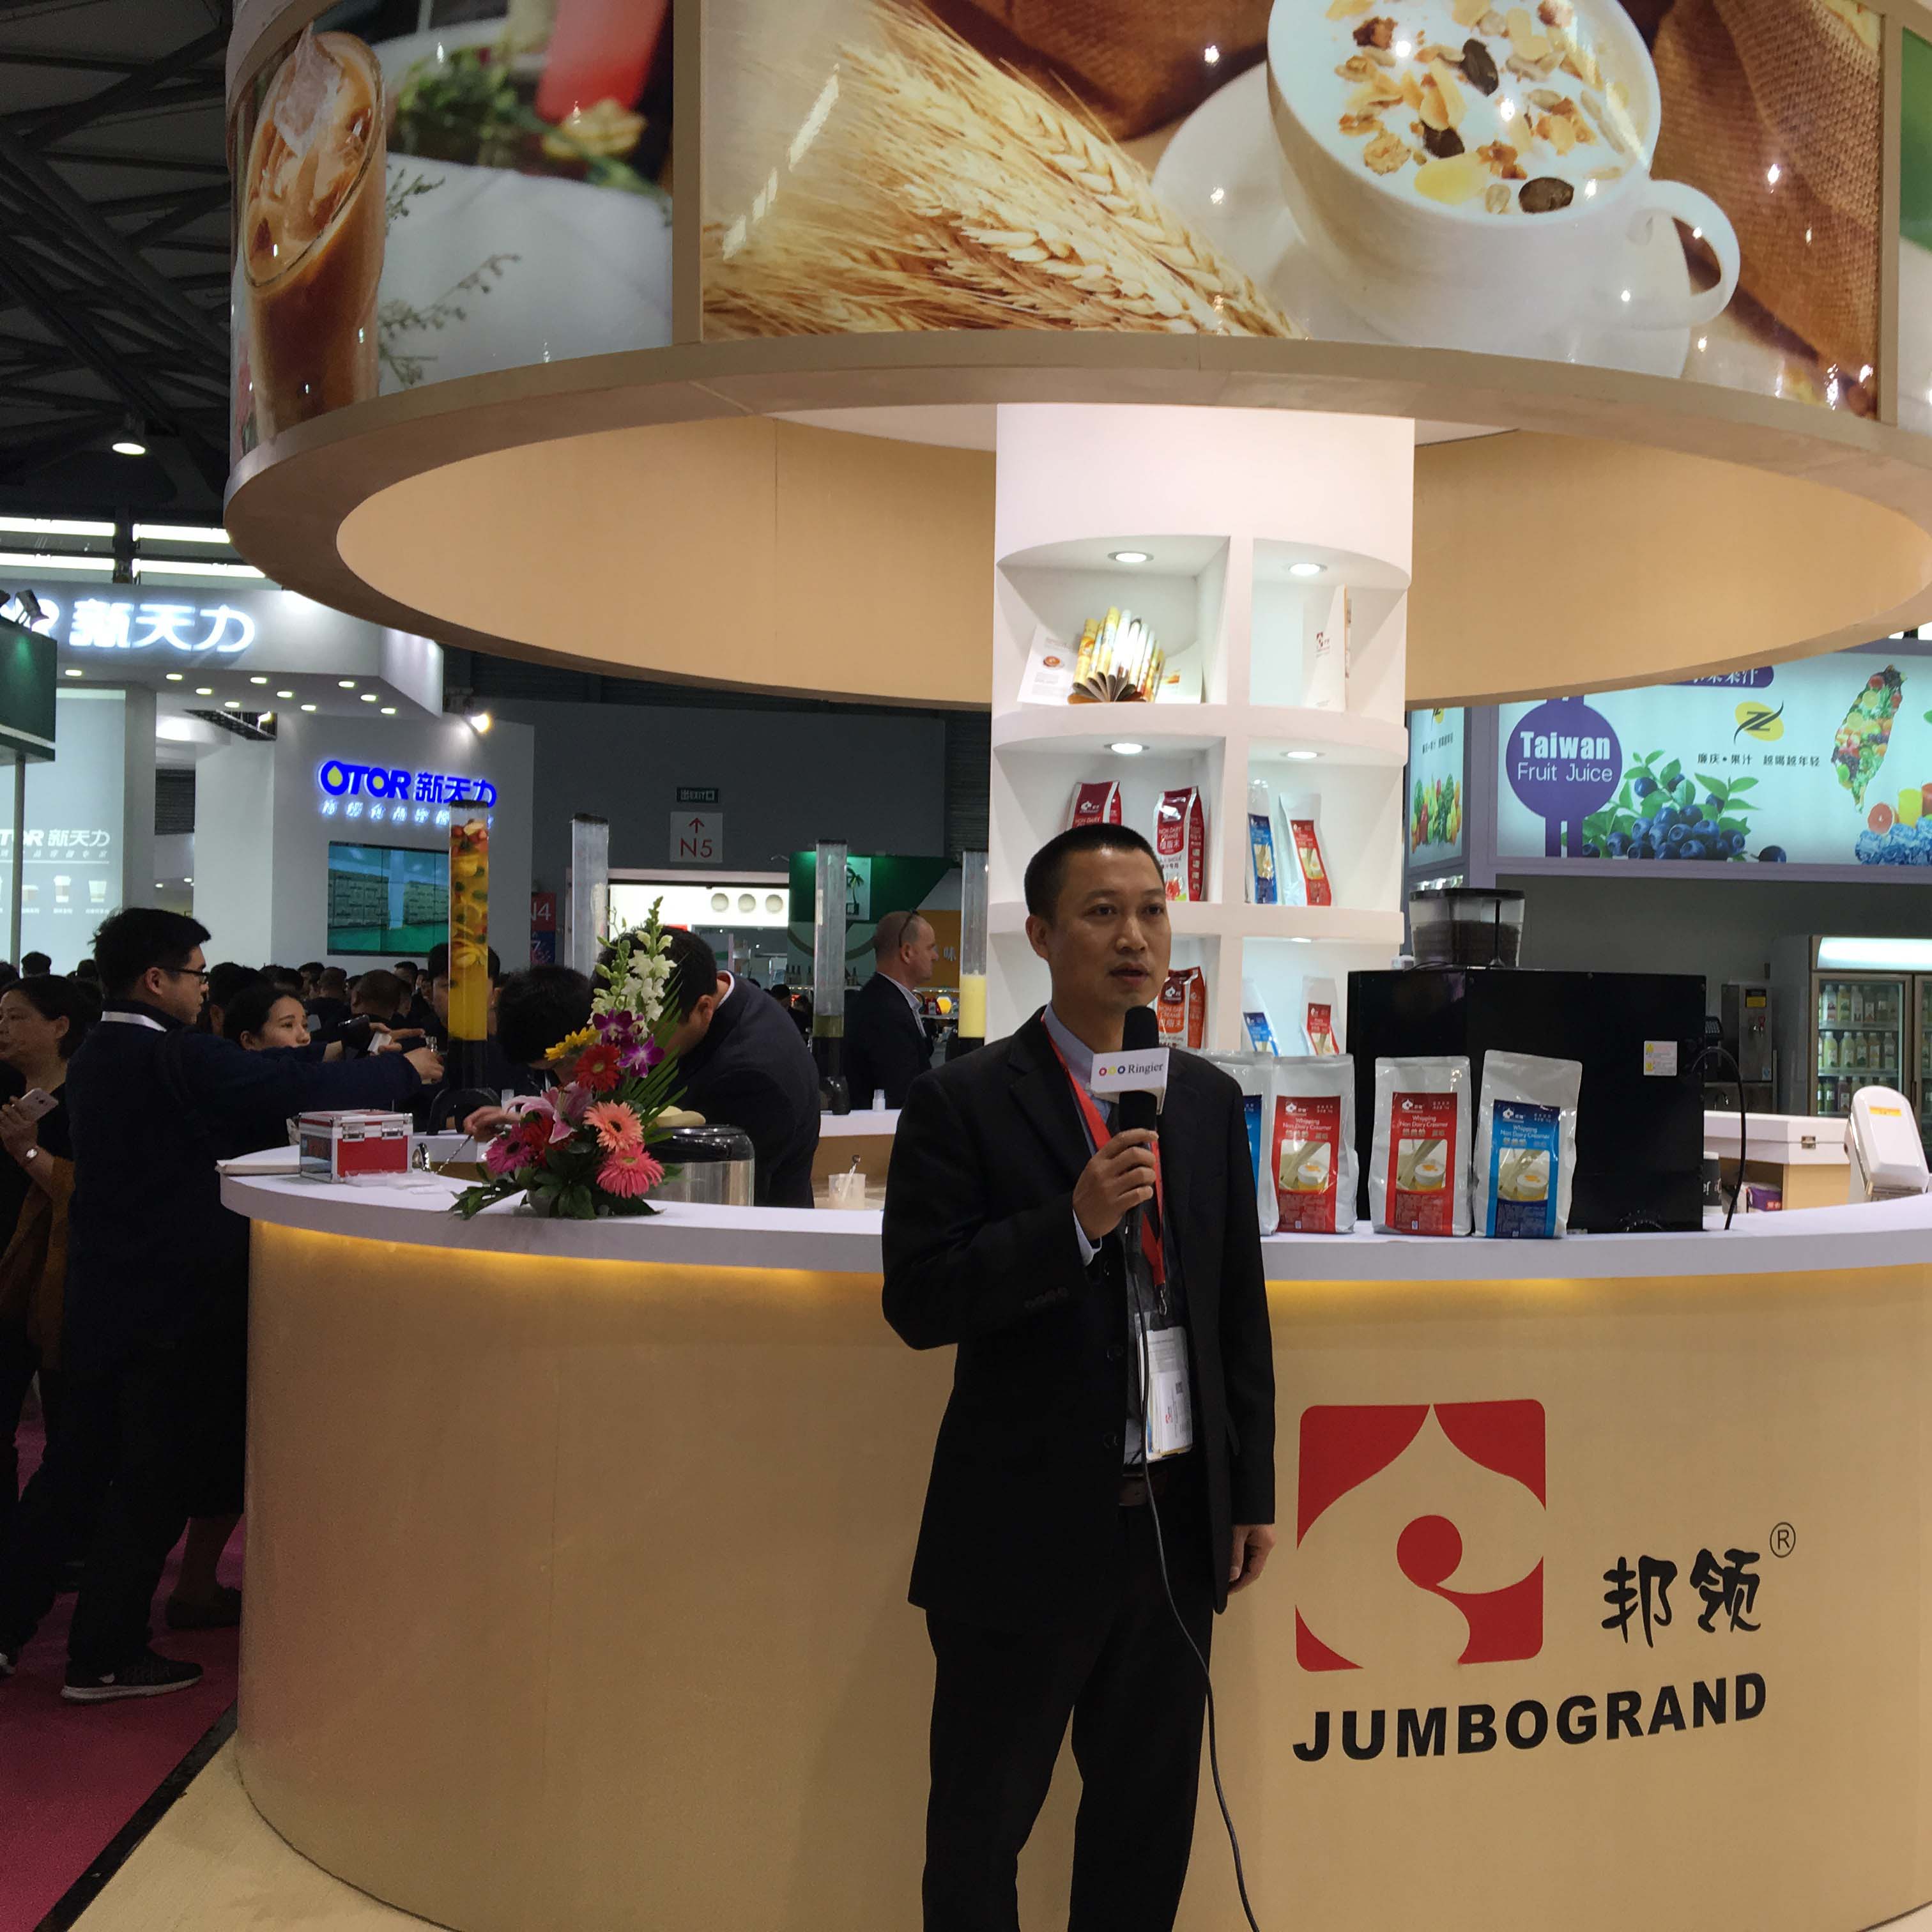 Gran comida jumbo en el hotelx 2017 Exposición de comida fina en Shangai